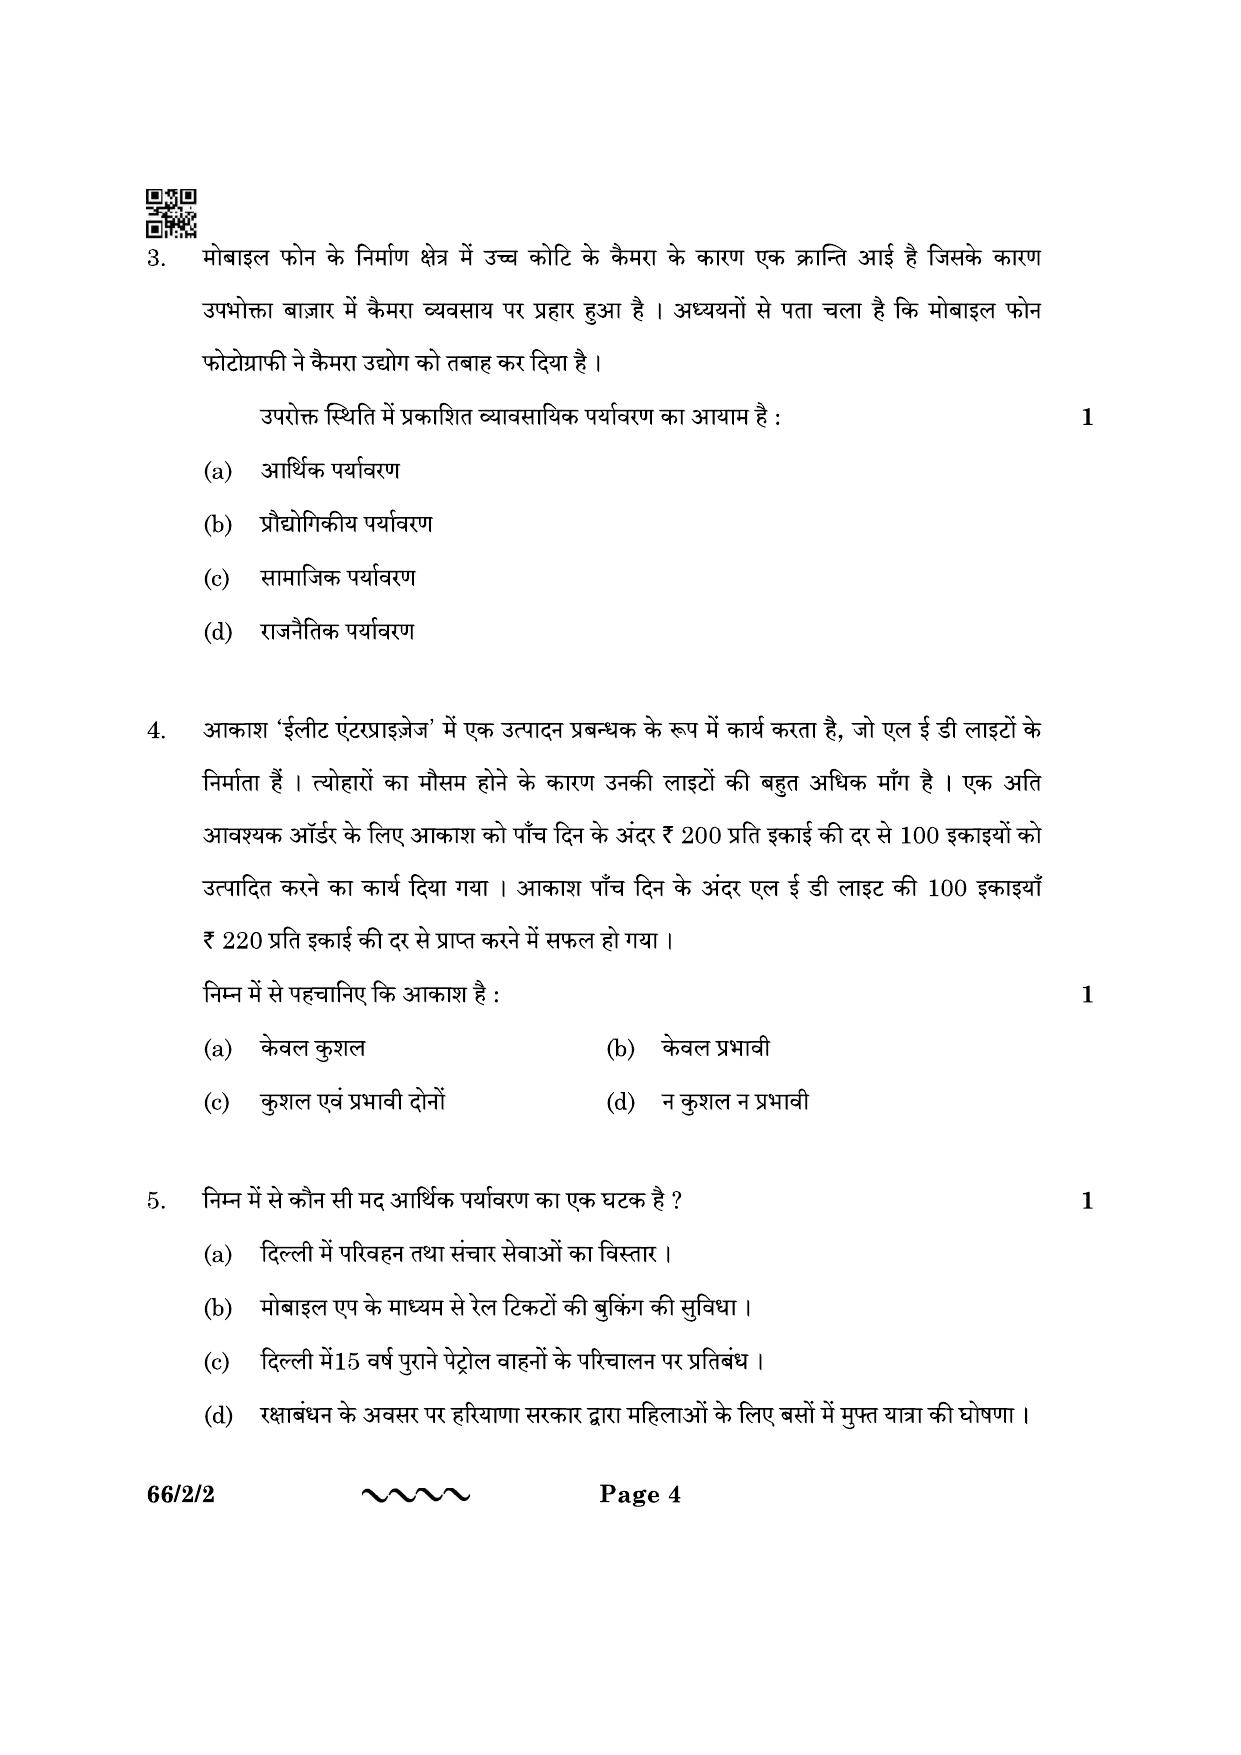 CBSE Class 12 66-2-2 Business Studies 2023 Question Paper - Page 4